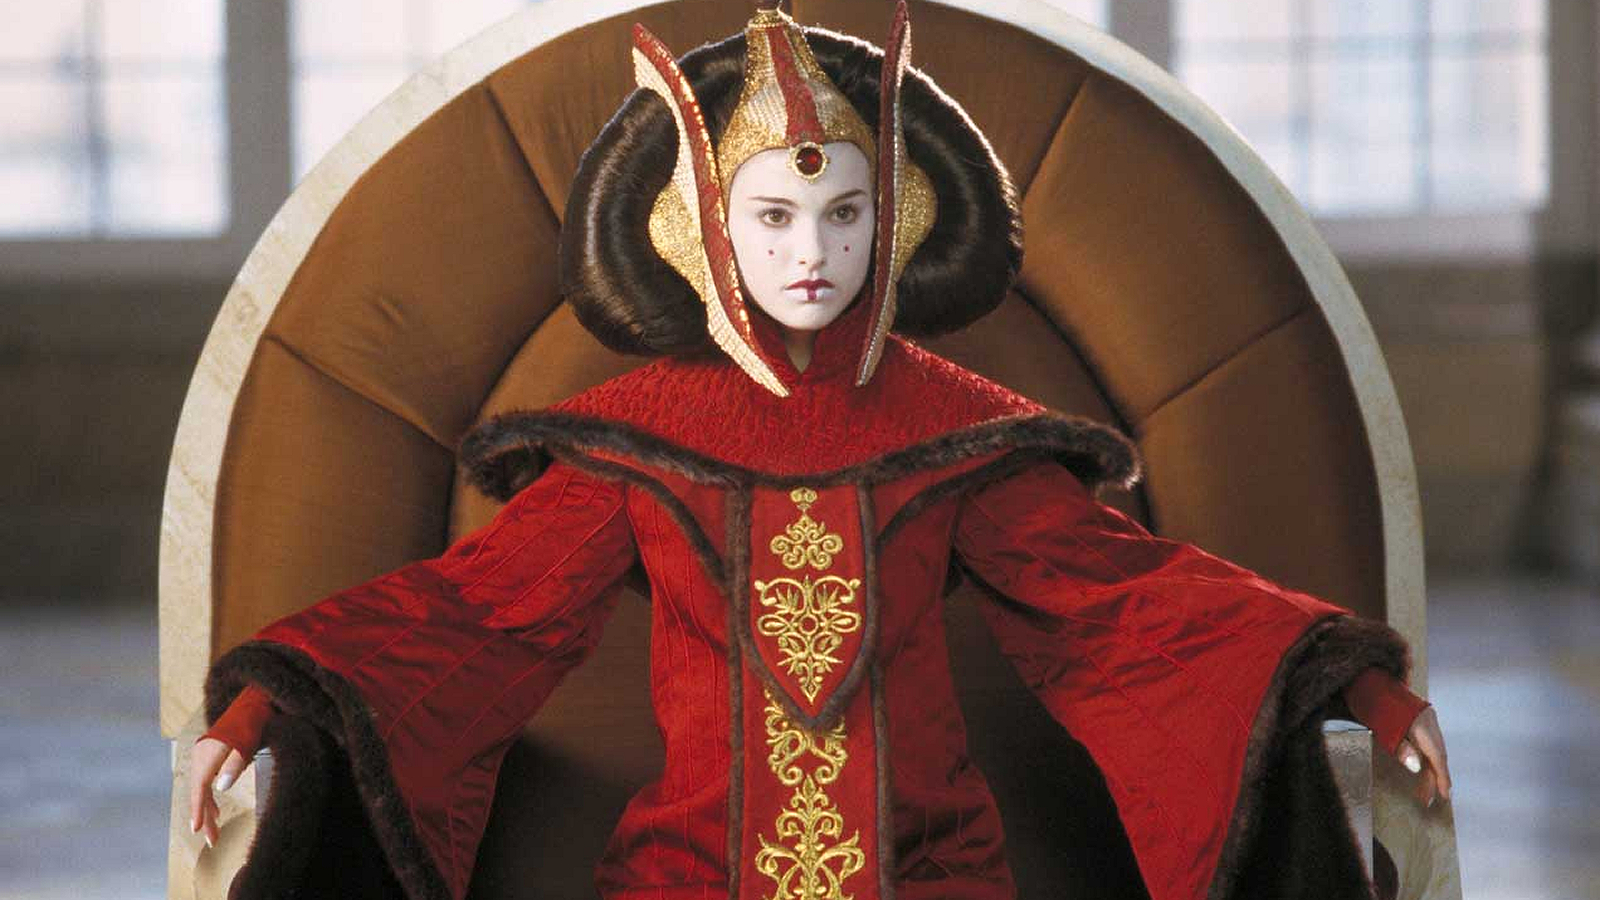 Natalie Portman as Queen Amidala in Star Wars: The Phantom Menace